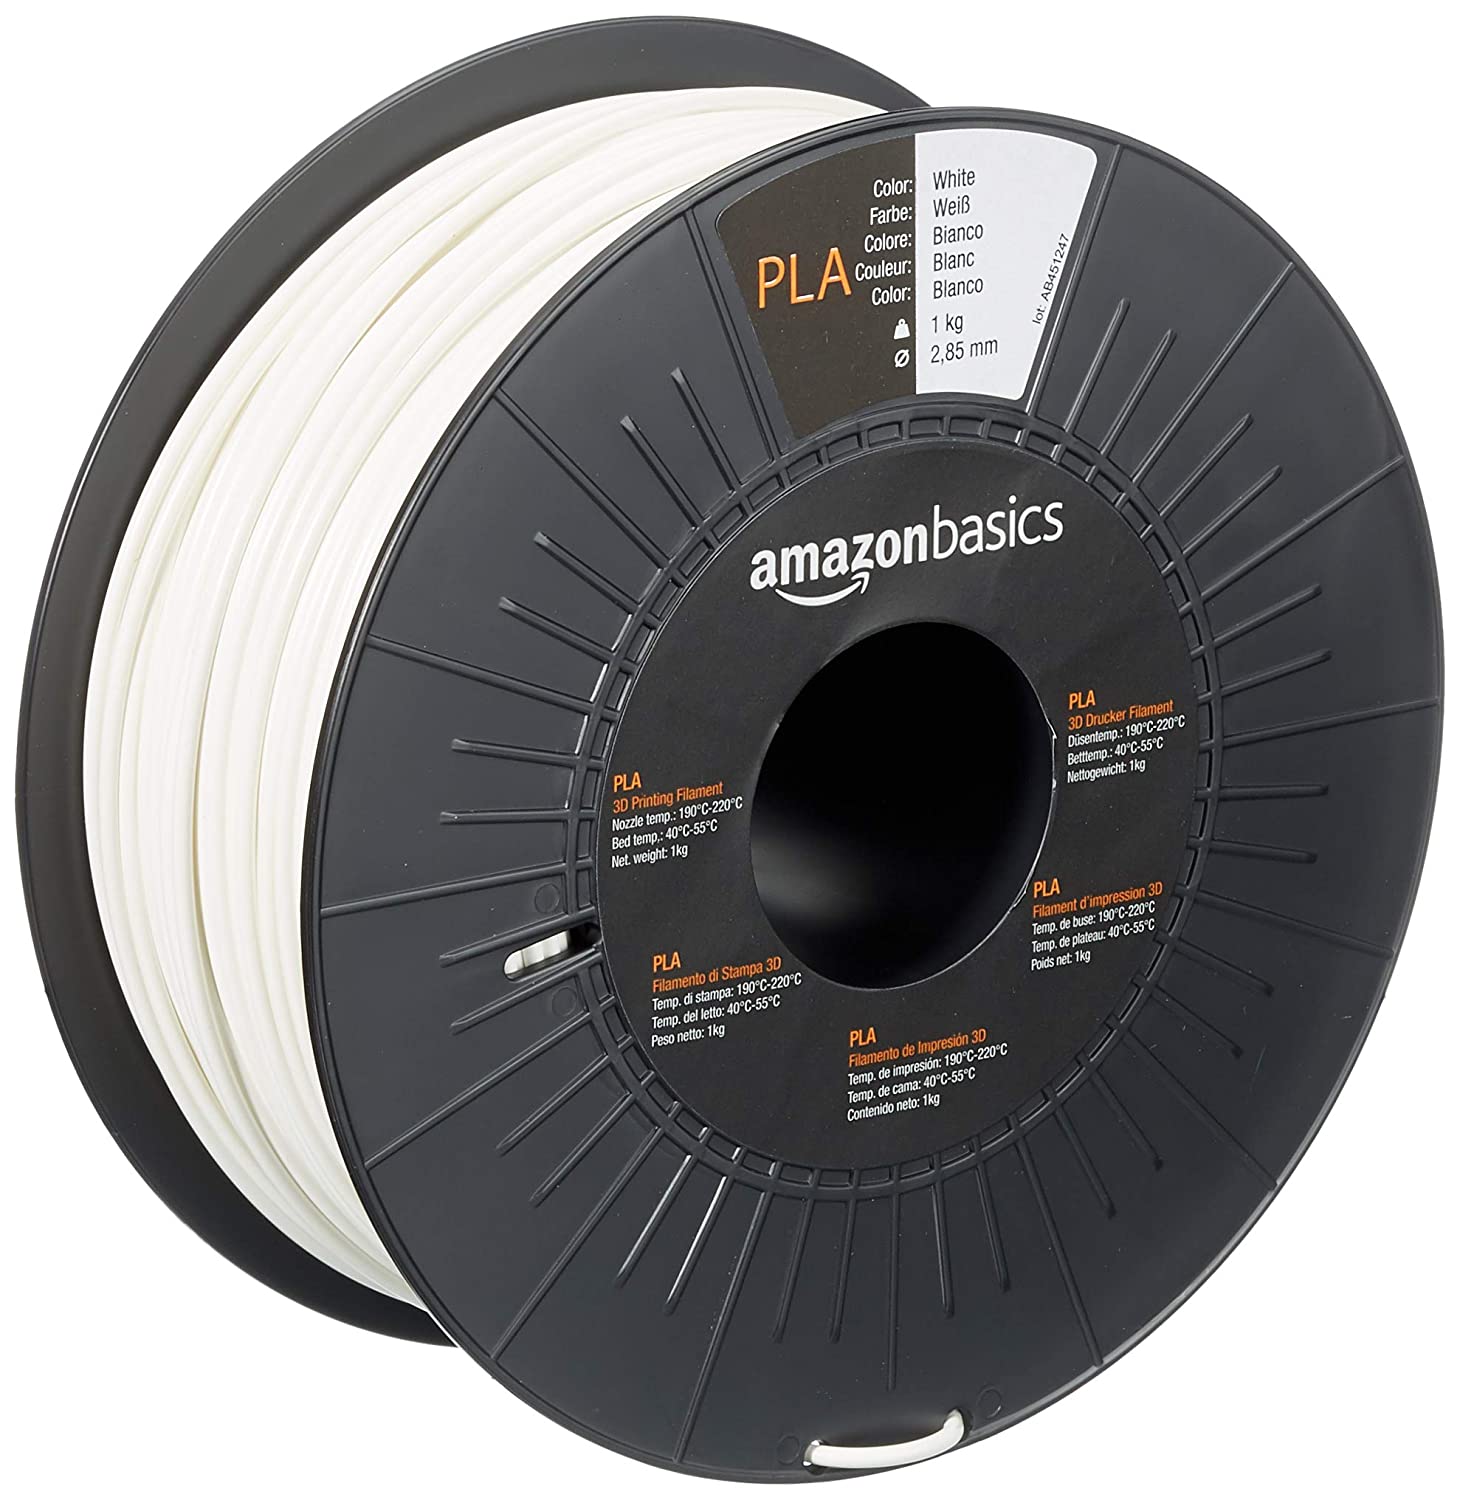 AmazonBasics - Filamento per stampanti 3D, in polilattato (PLA), 2,85 mm, bianco, 1 kg per bobina